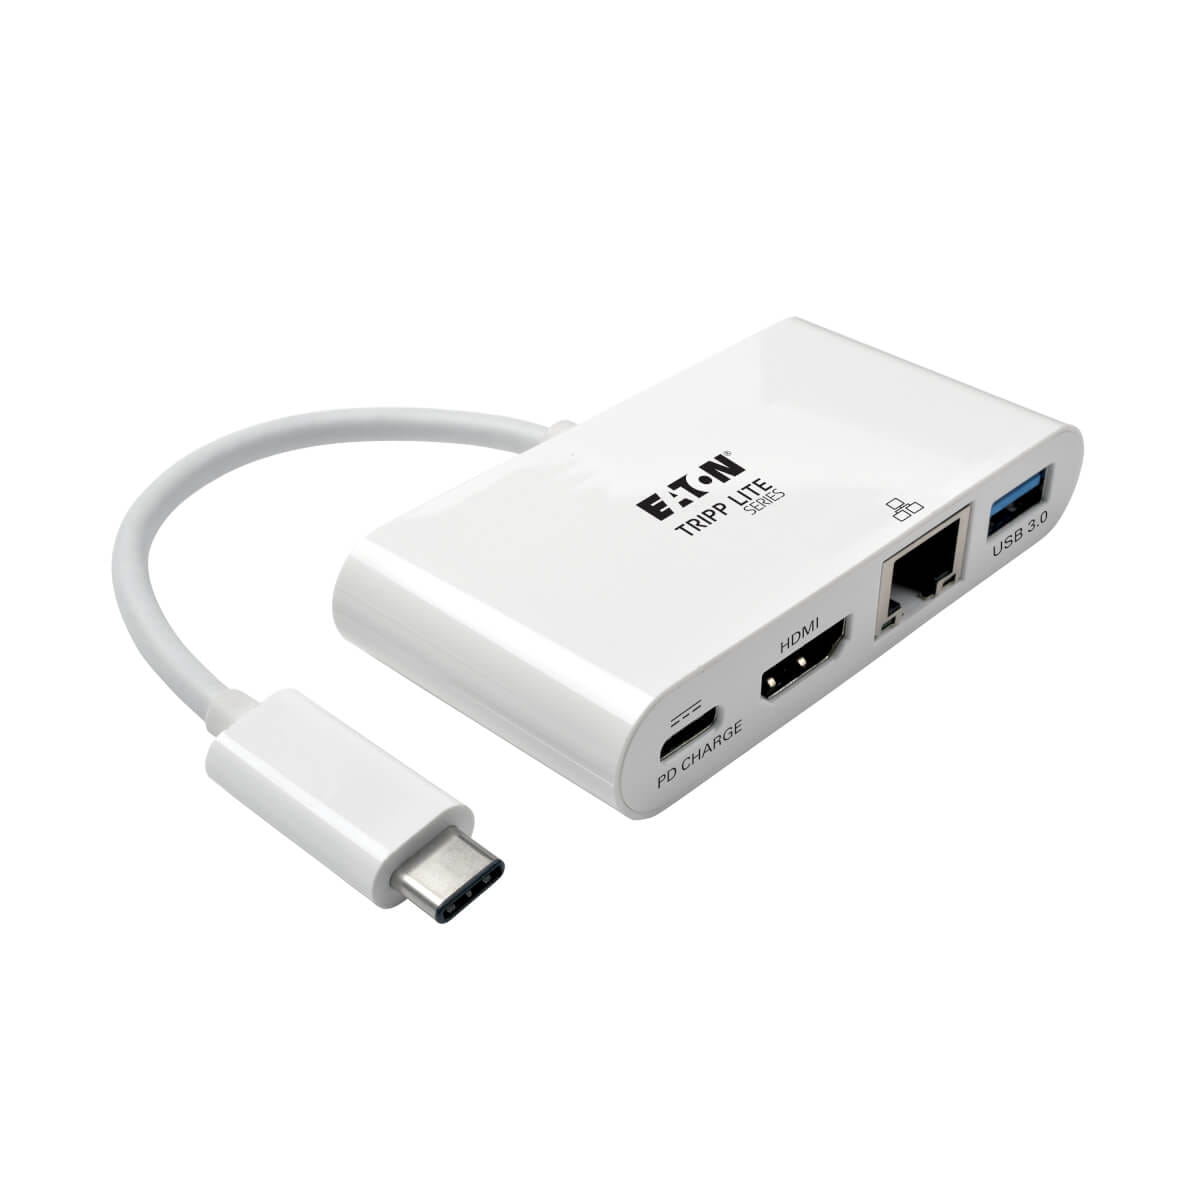 Tripp U444-06N-HGU-C USB-C Multiport Adapter – HDMI, USB 3.x (5 Gbps) Nabenanschluss, Gigabit Ethernet, 60 W PD-Aufladung, HDCP, Weiß, 1920 x 1080 Pixel